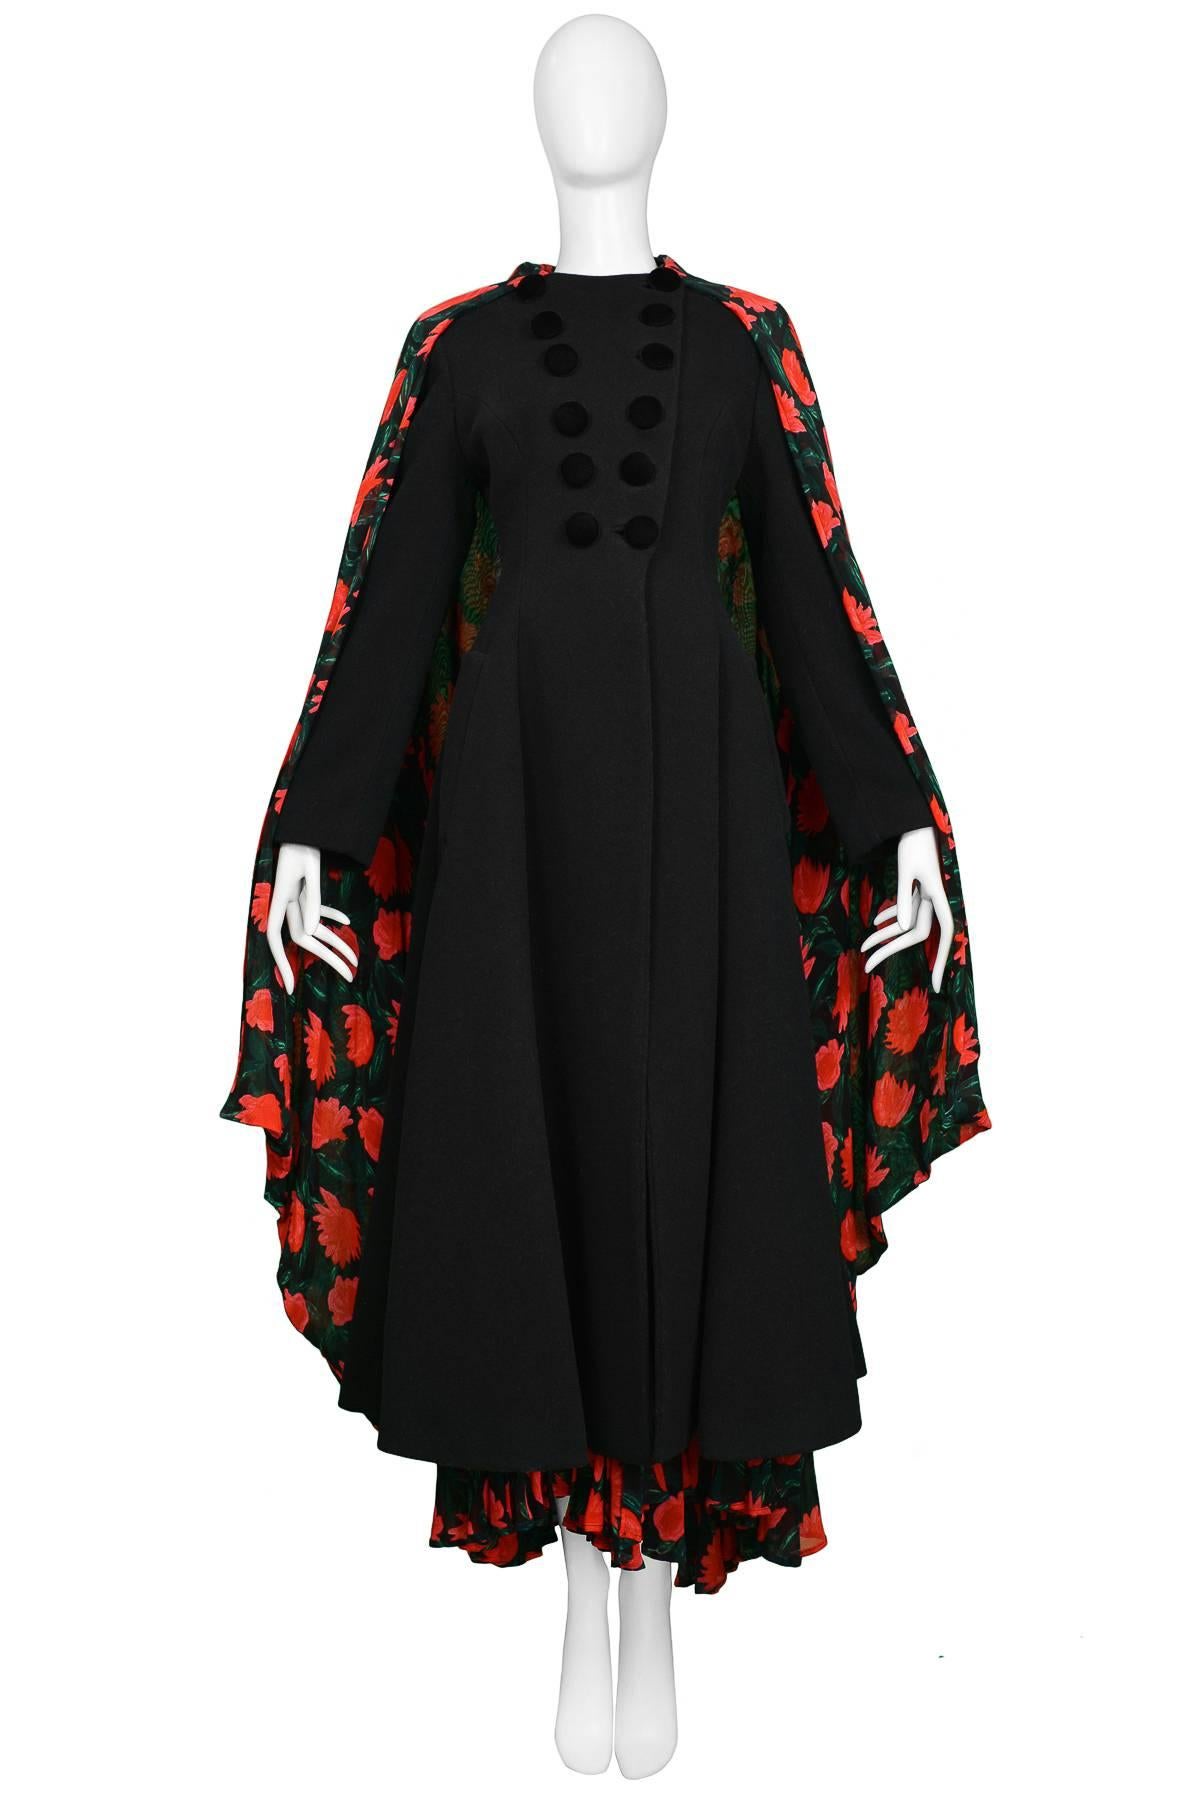 Dolce & Gabbana Black Wool and Velvet Floral Shawl Coat 1990s 1